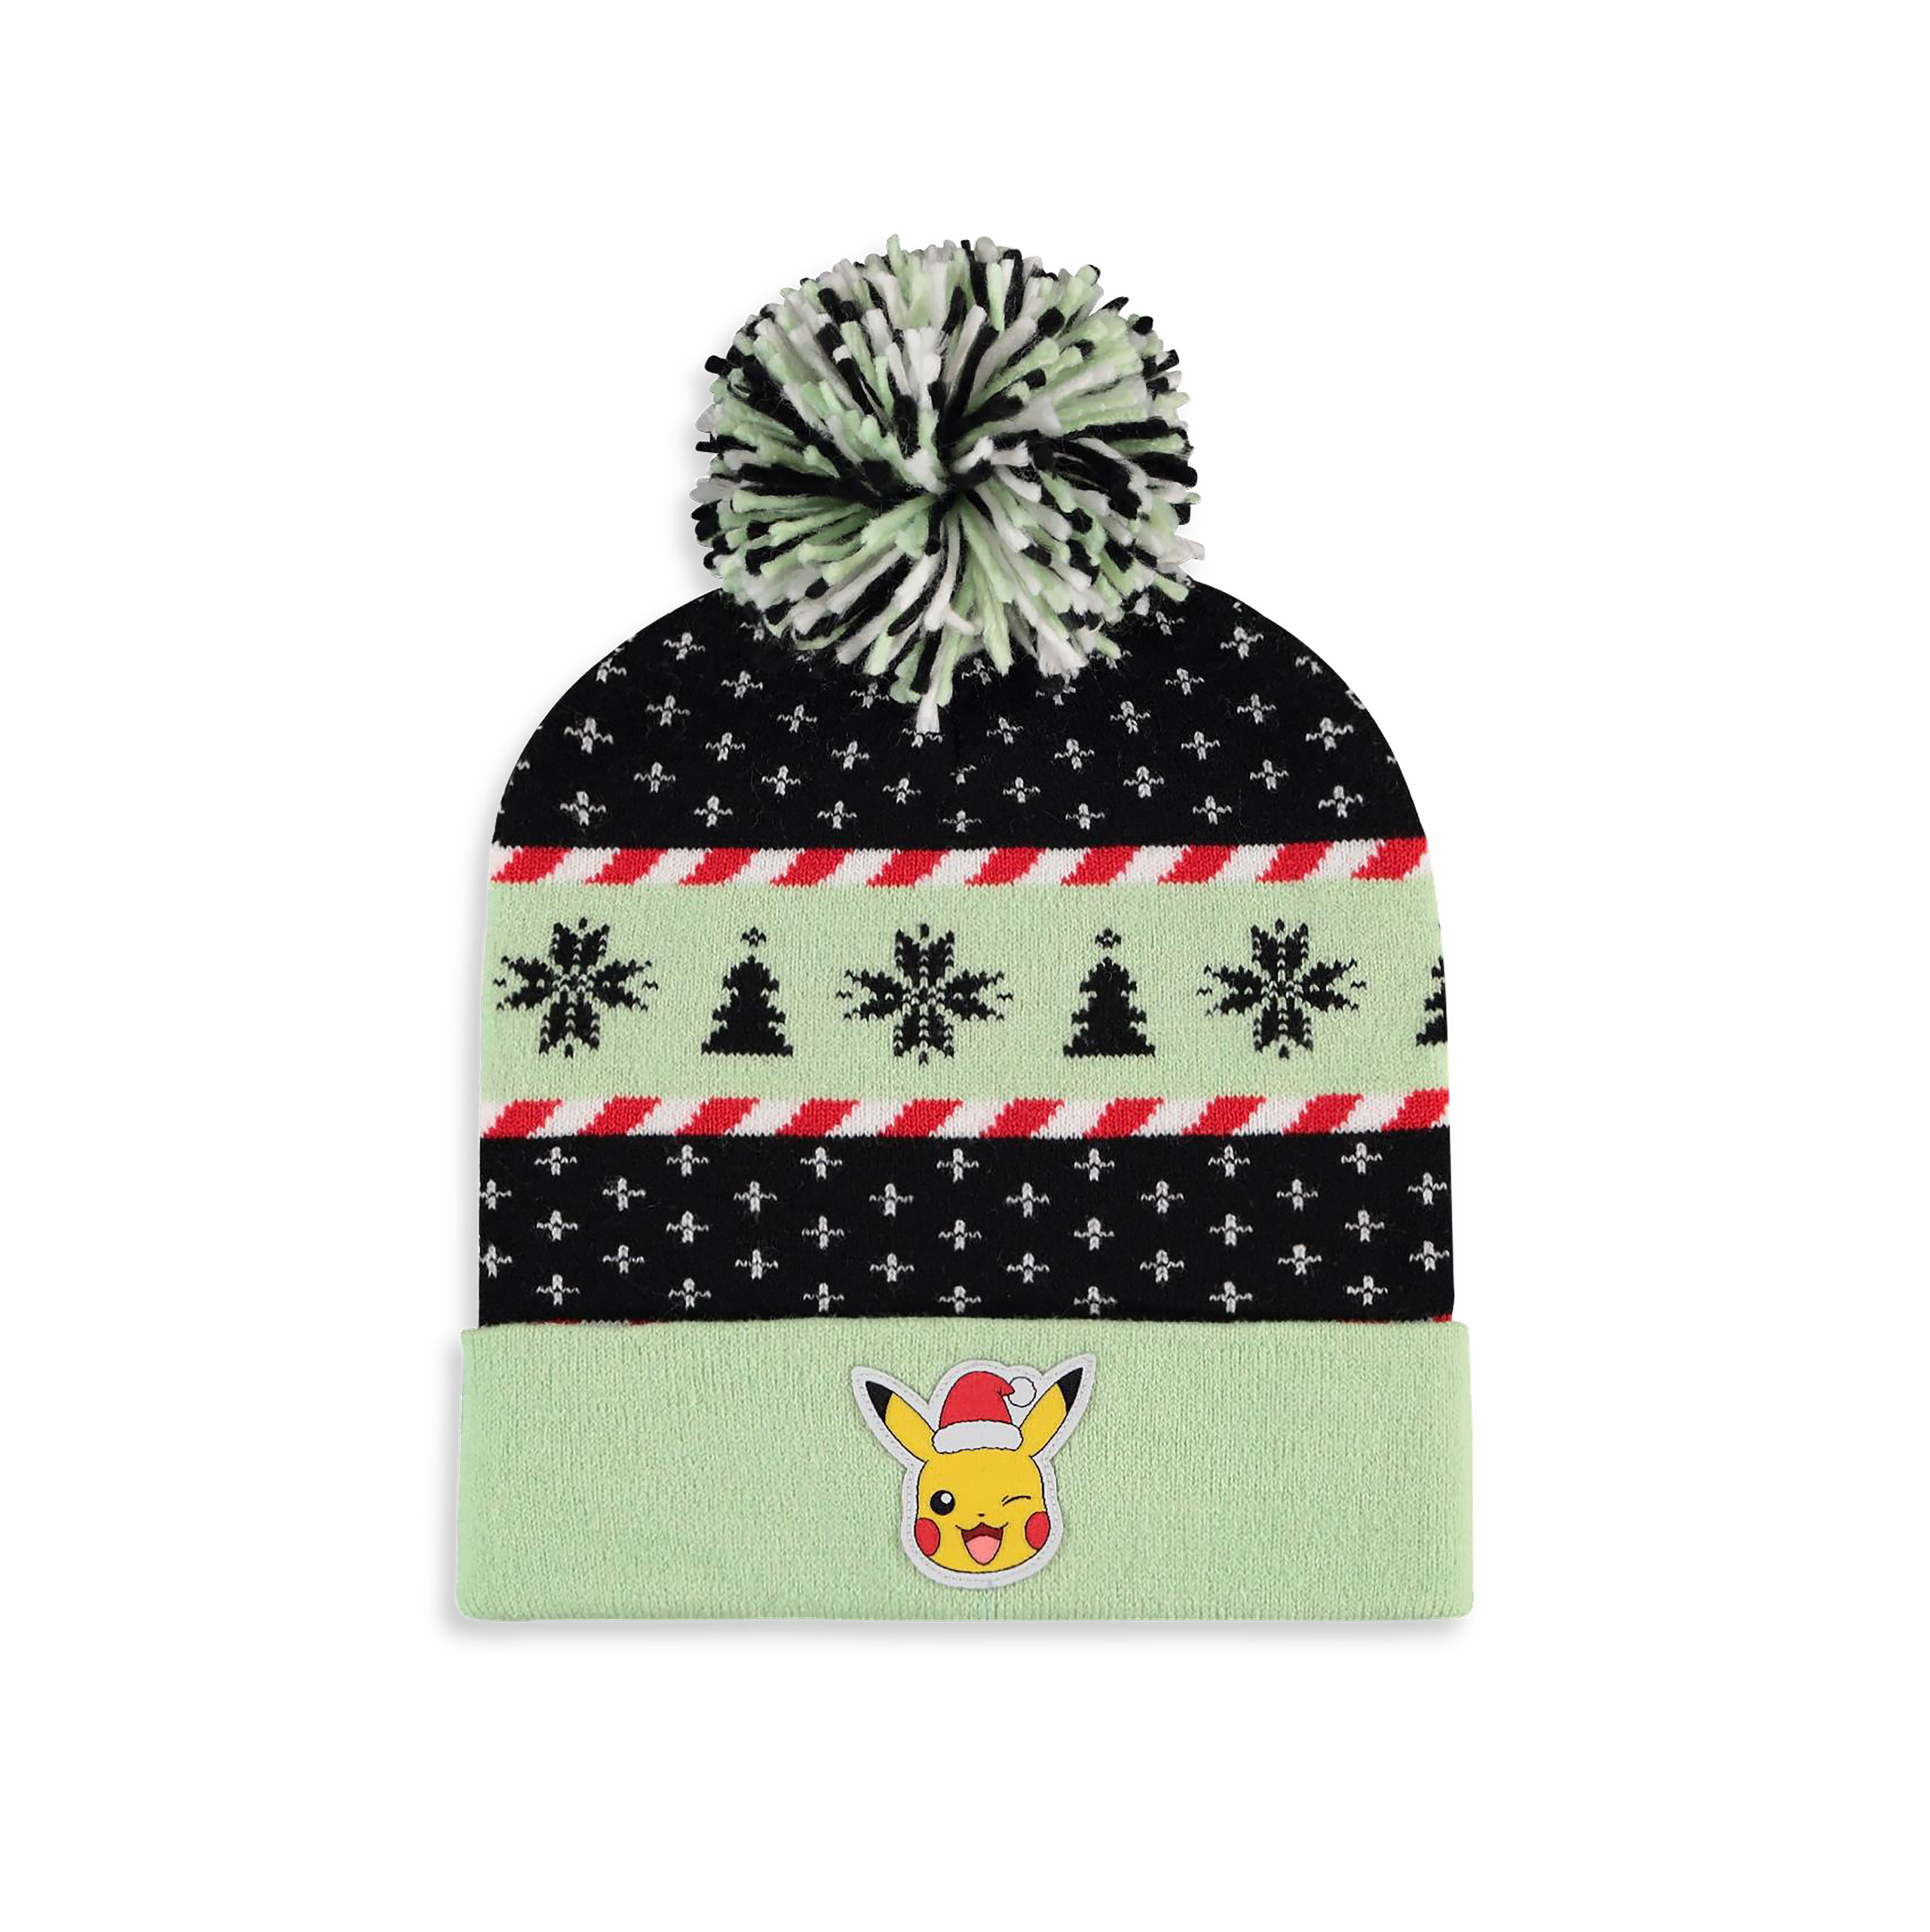 Pokemon - Pikachu Hat and Scarf Gift Set